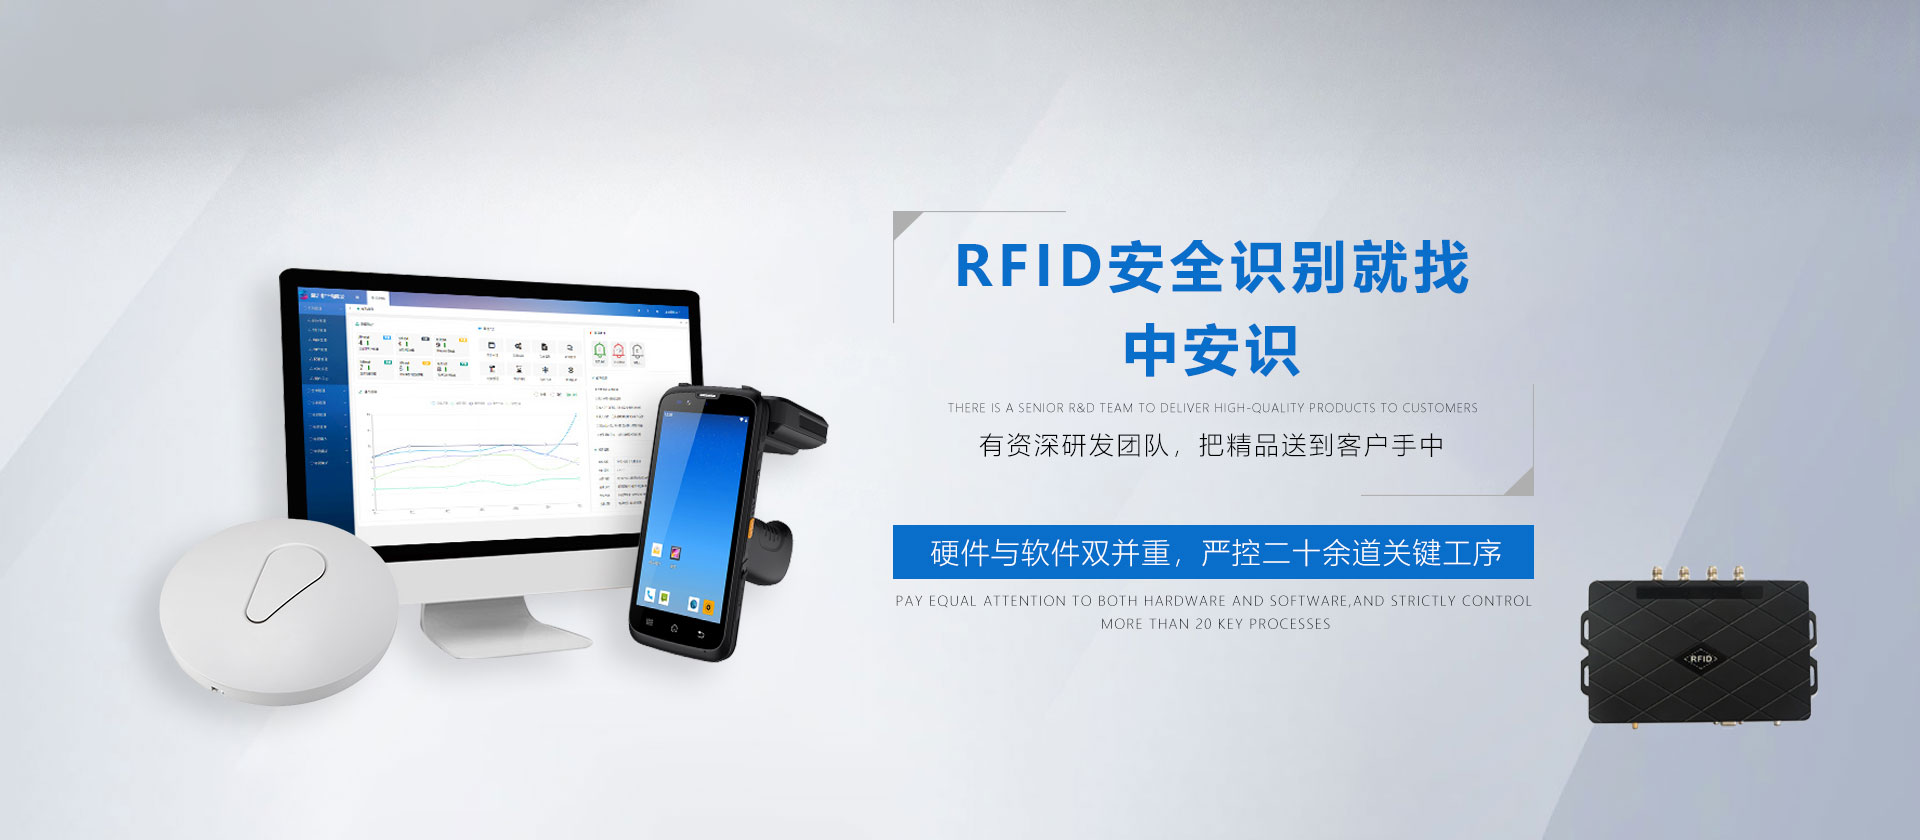 RFID软硬件产品方案